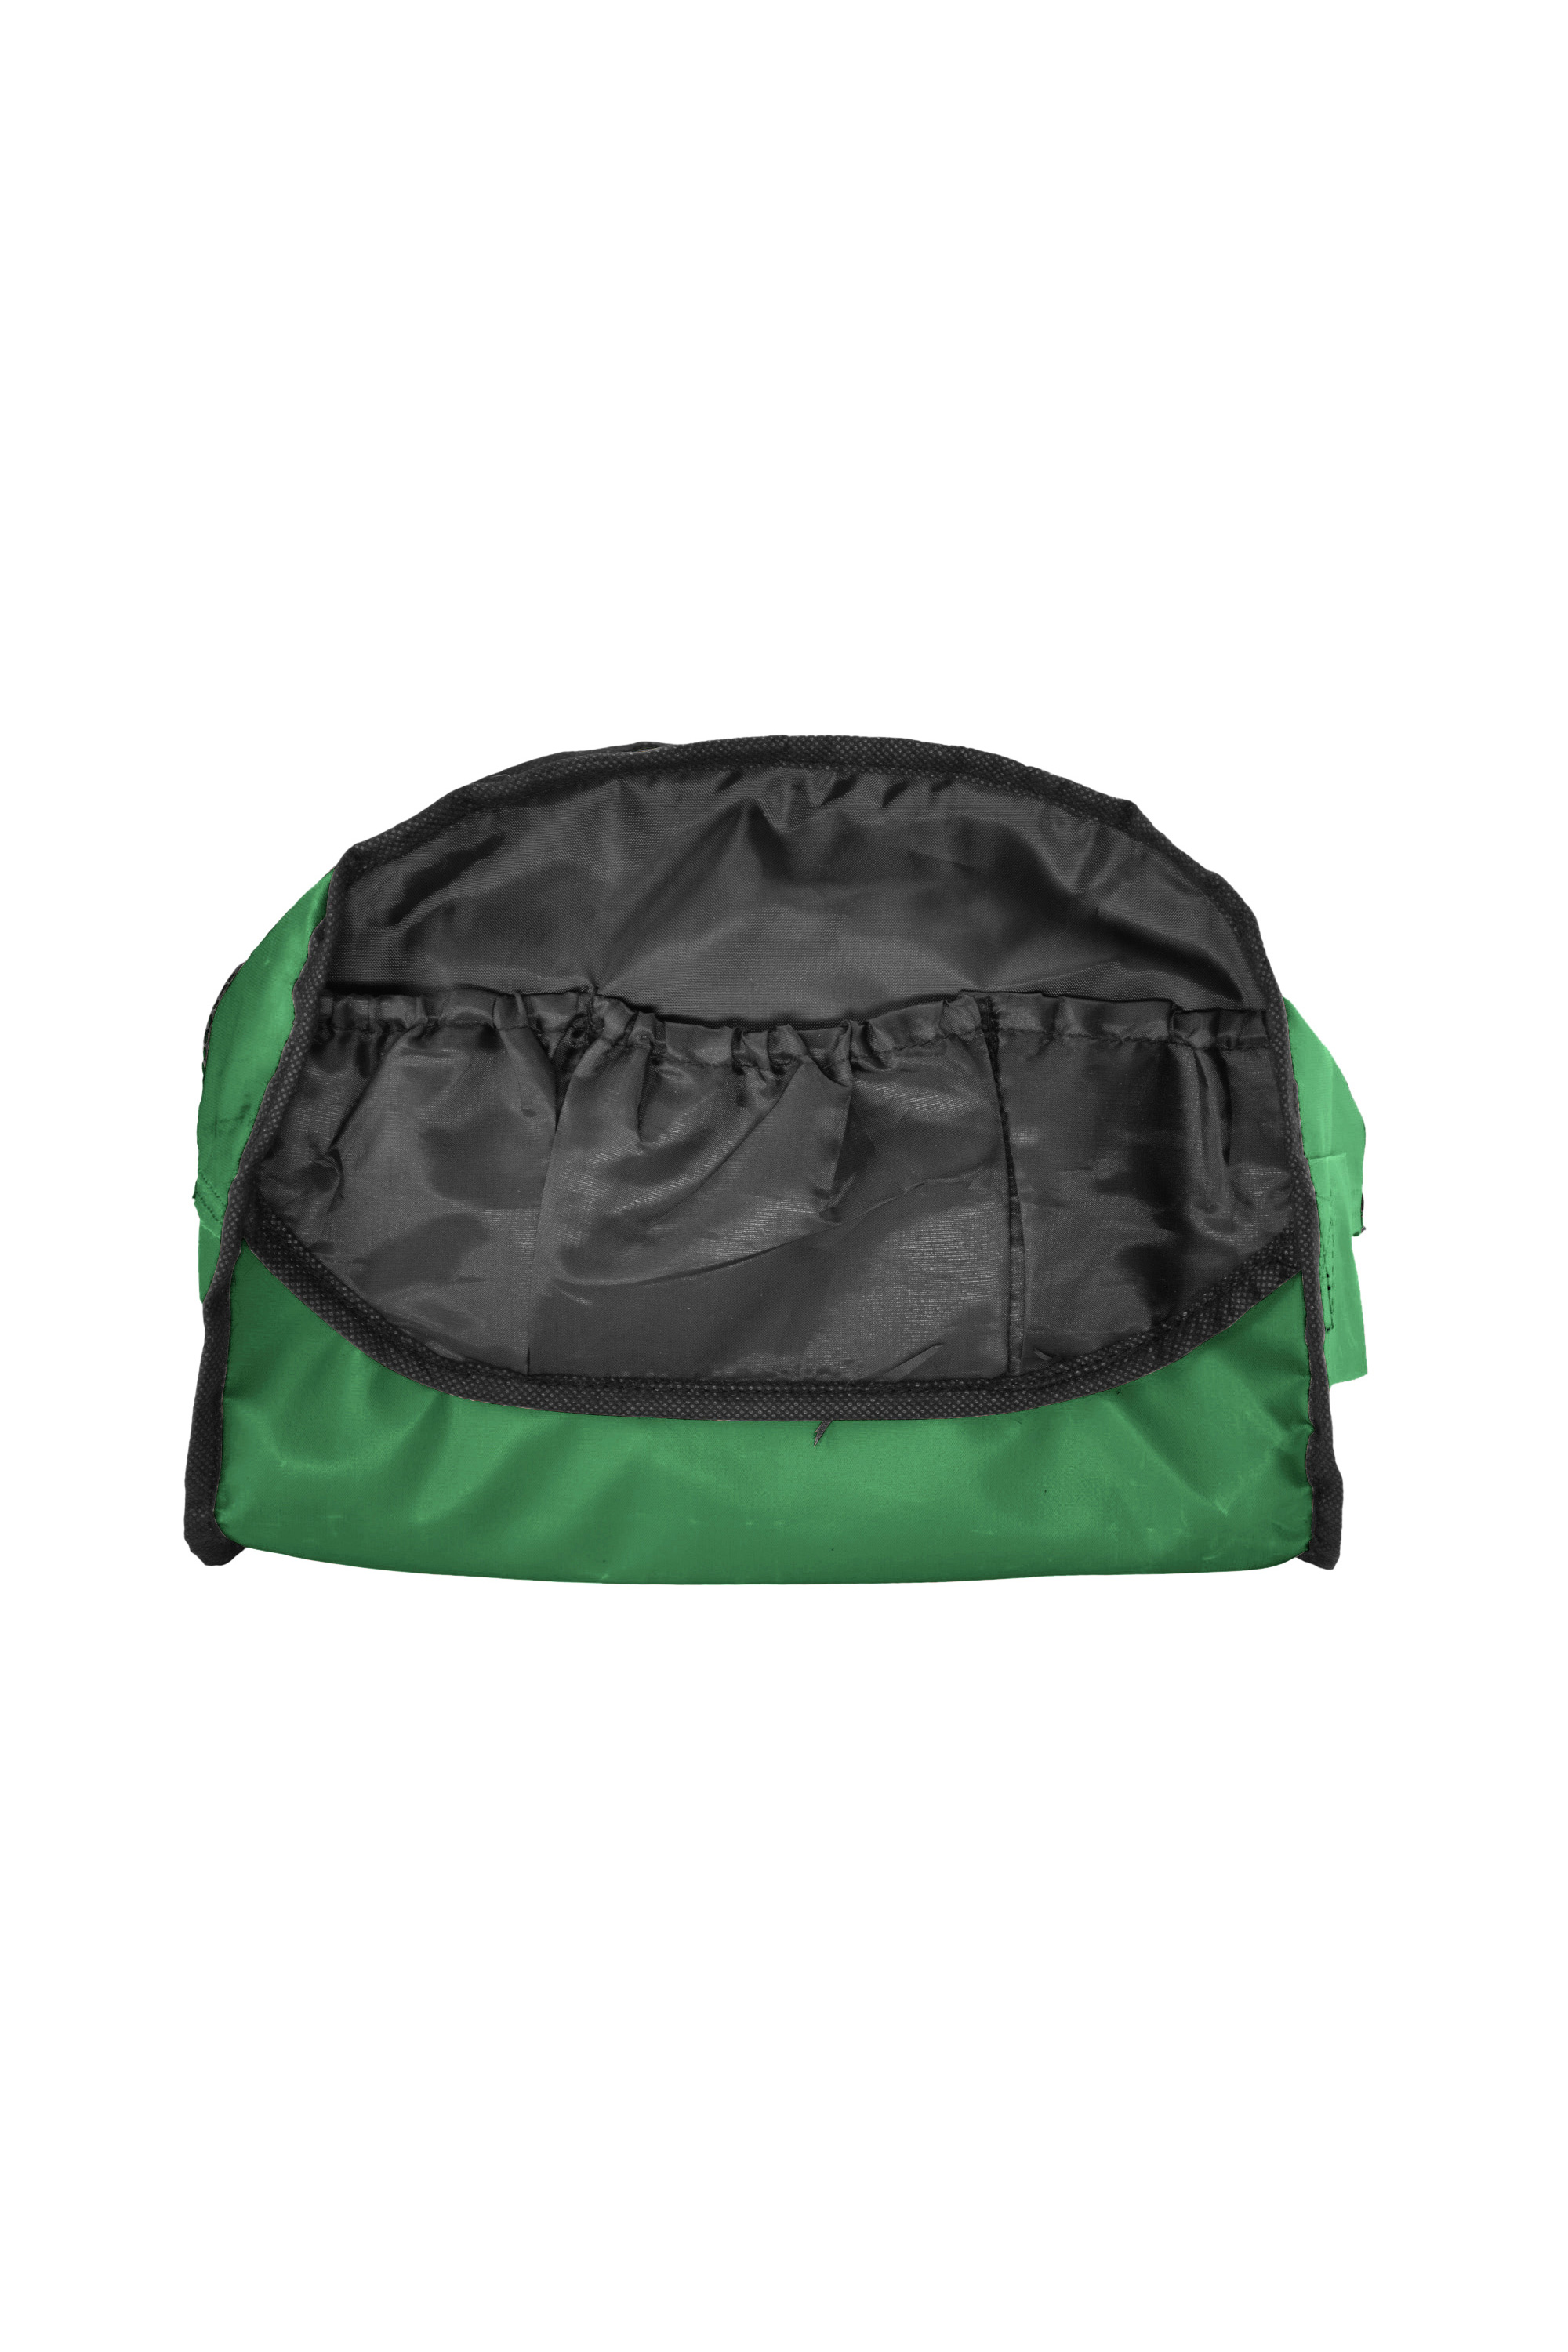 DALIX 12" Mini Two Tone Duffle Bag (Dark Green) - image 2 of 7